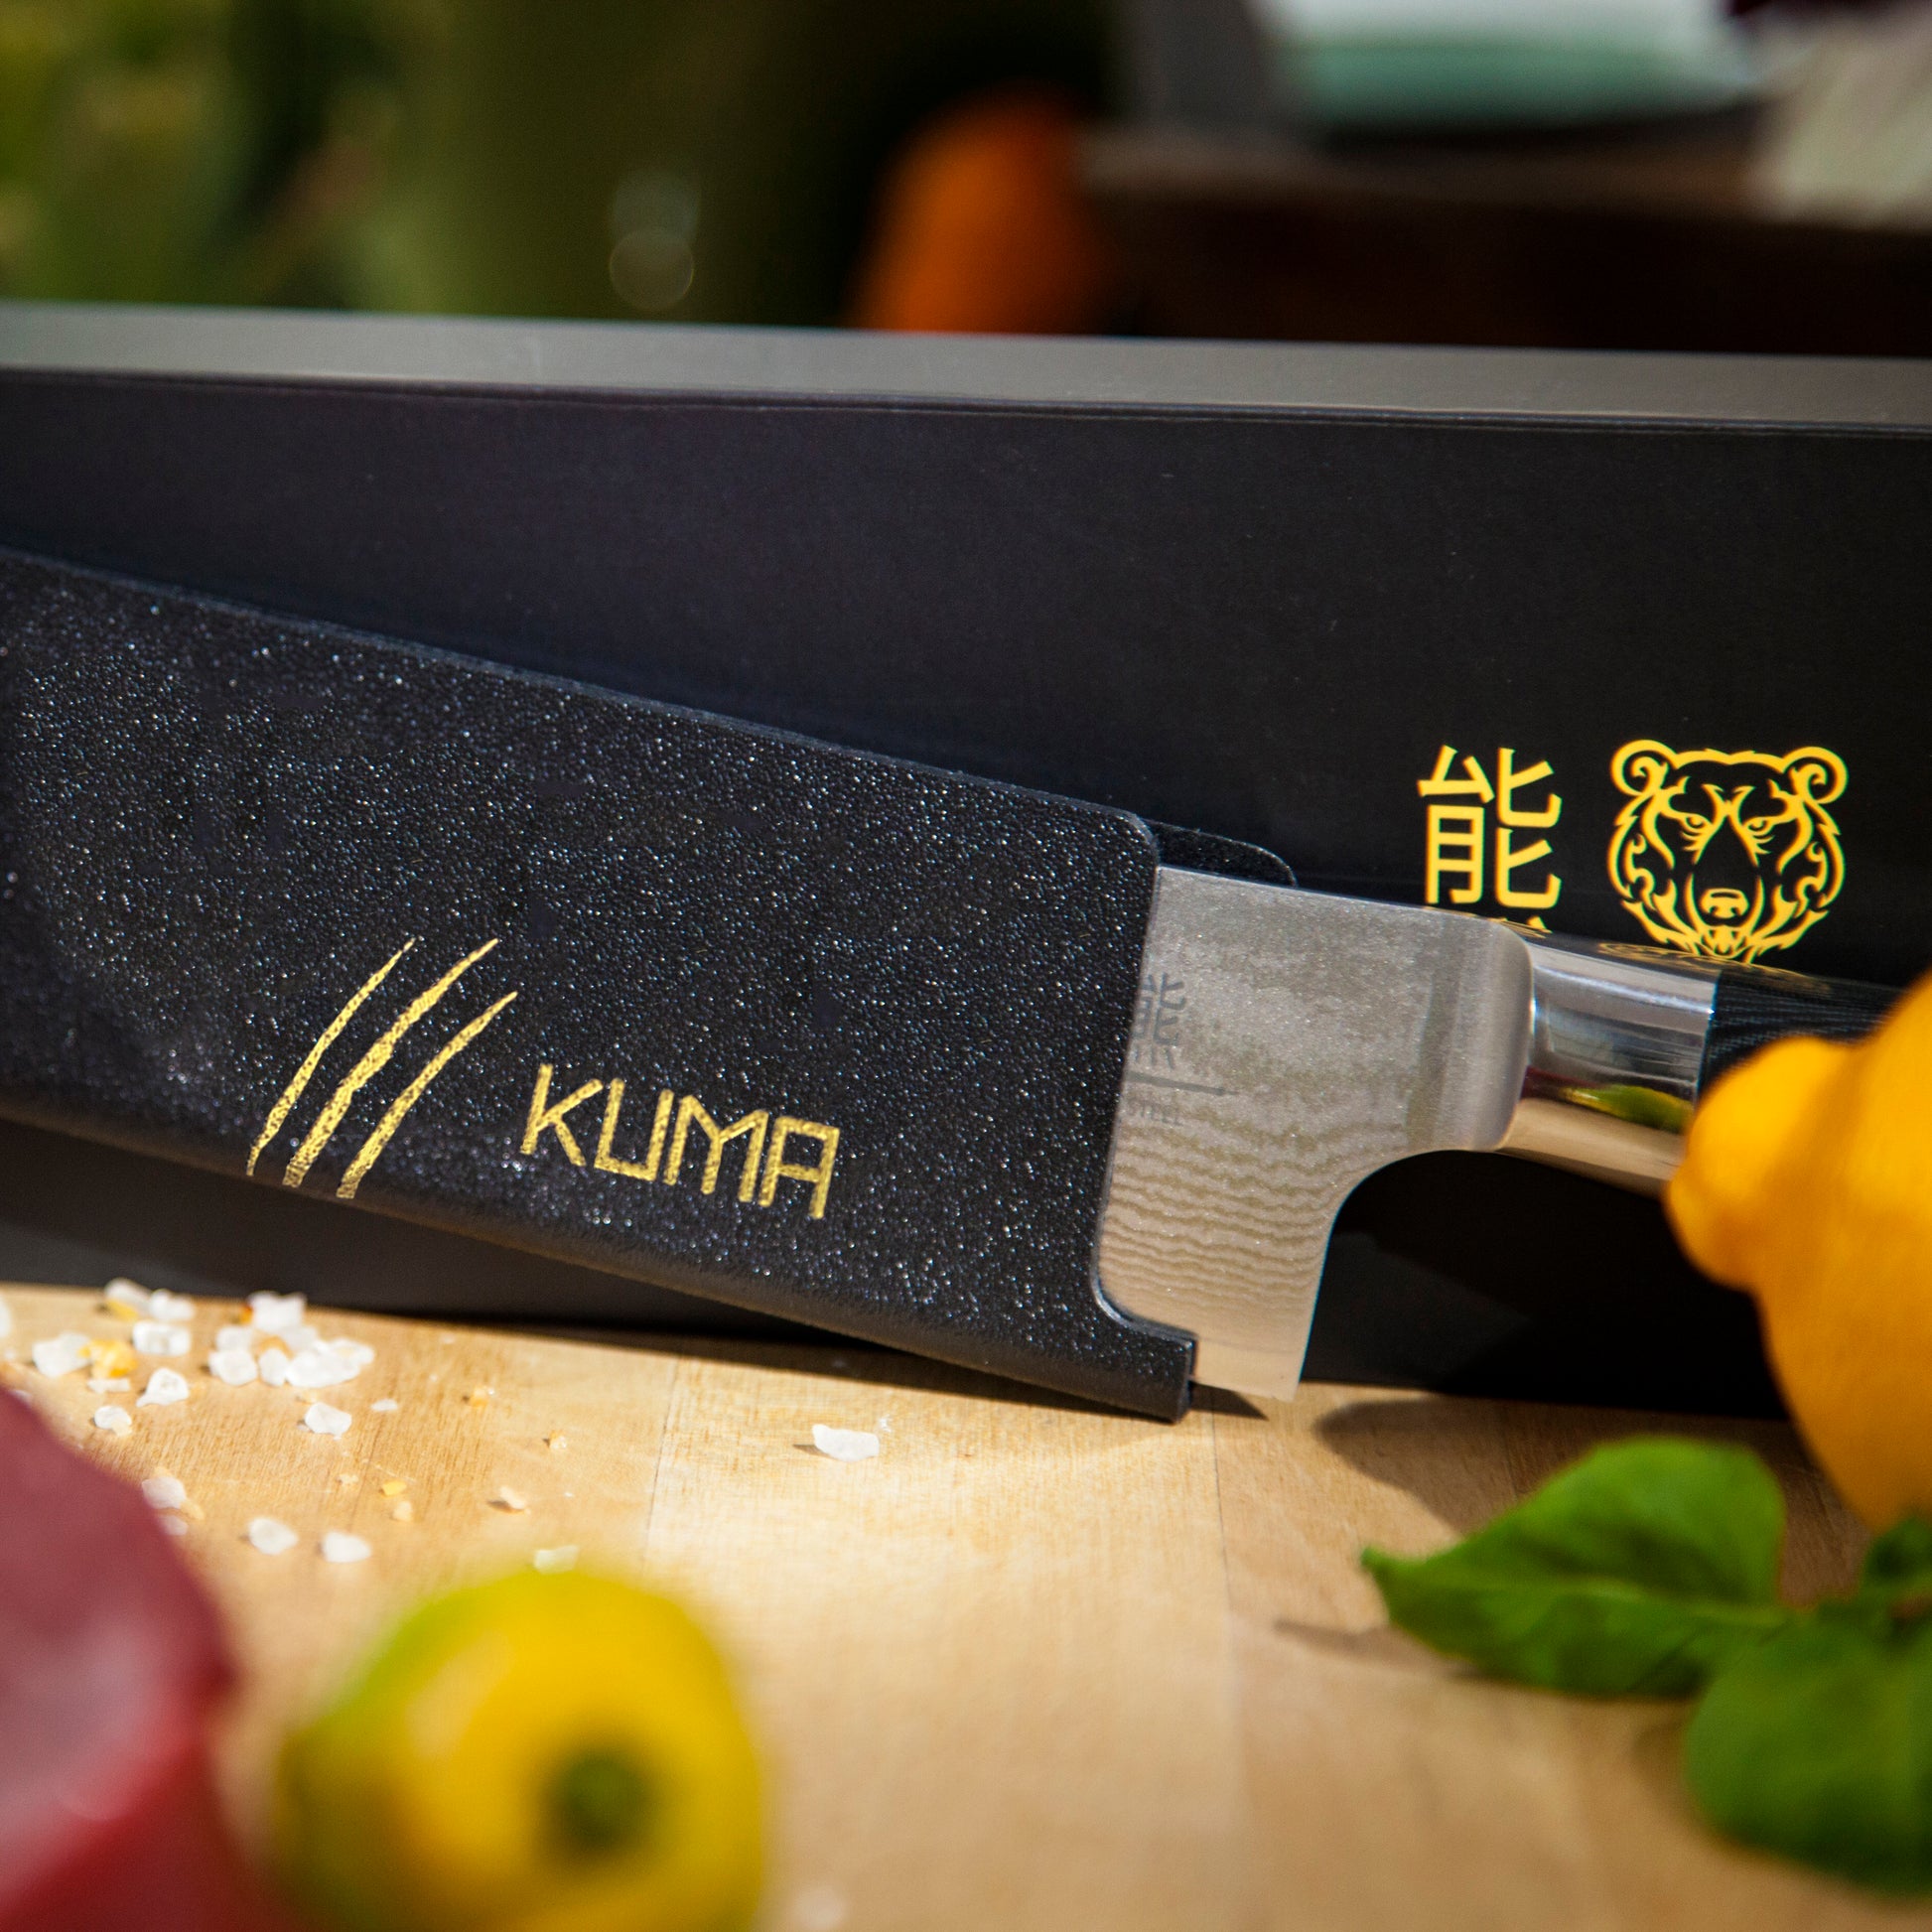 Blade Sharp Kitchen Kitchen Knife Set Stainless Steel Chef Knives Cutlery  Sheath